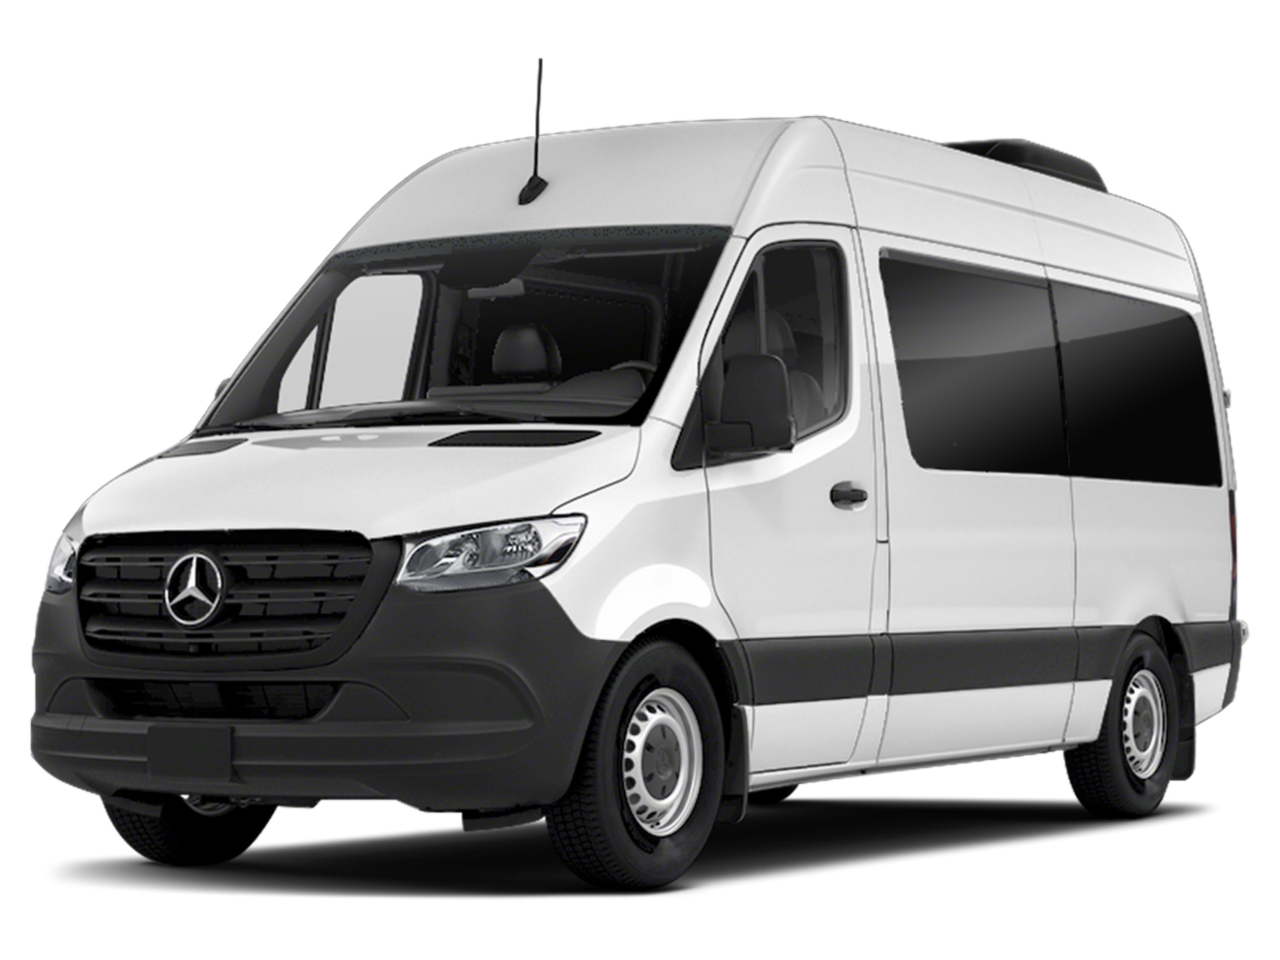 New MercedesBenz Sprinter Passenger Van from your DALLAS, TX